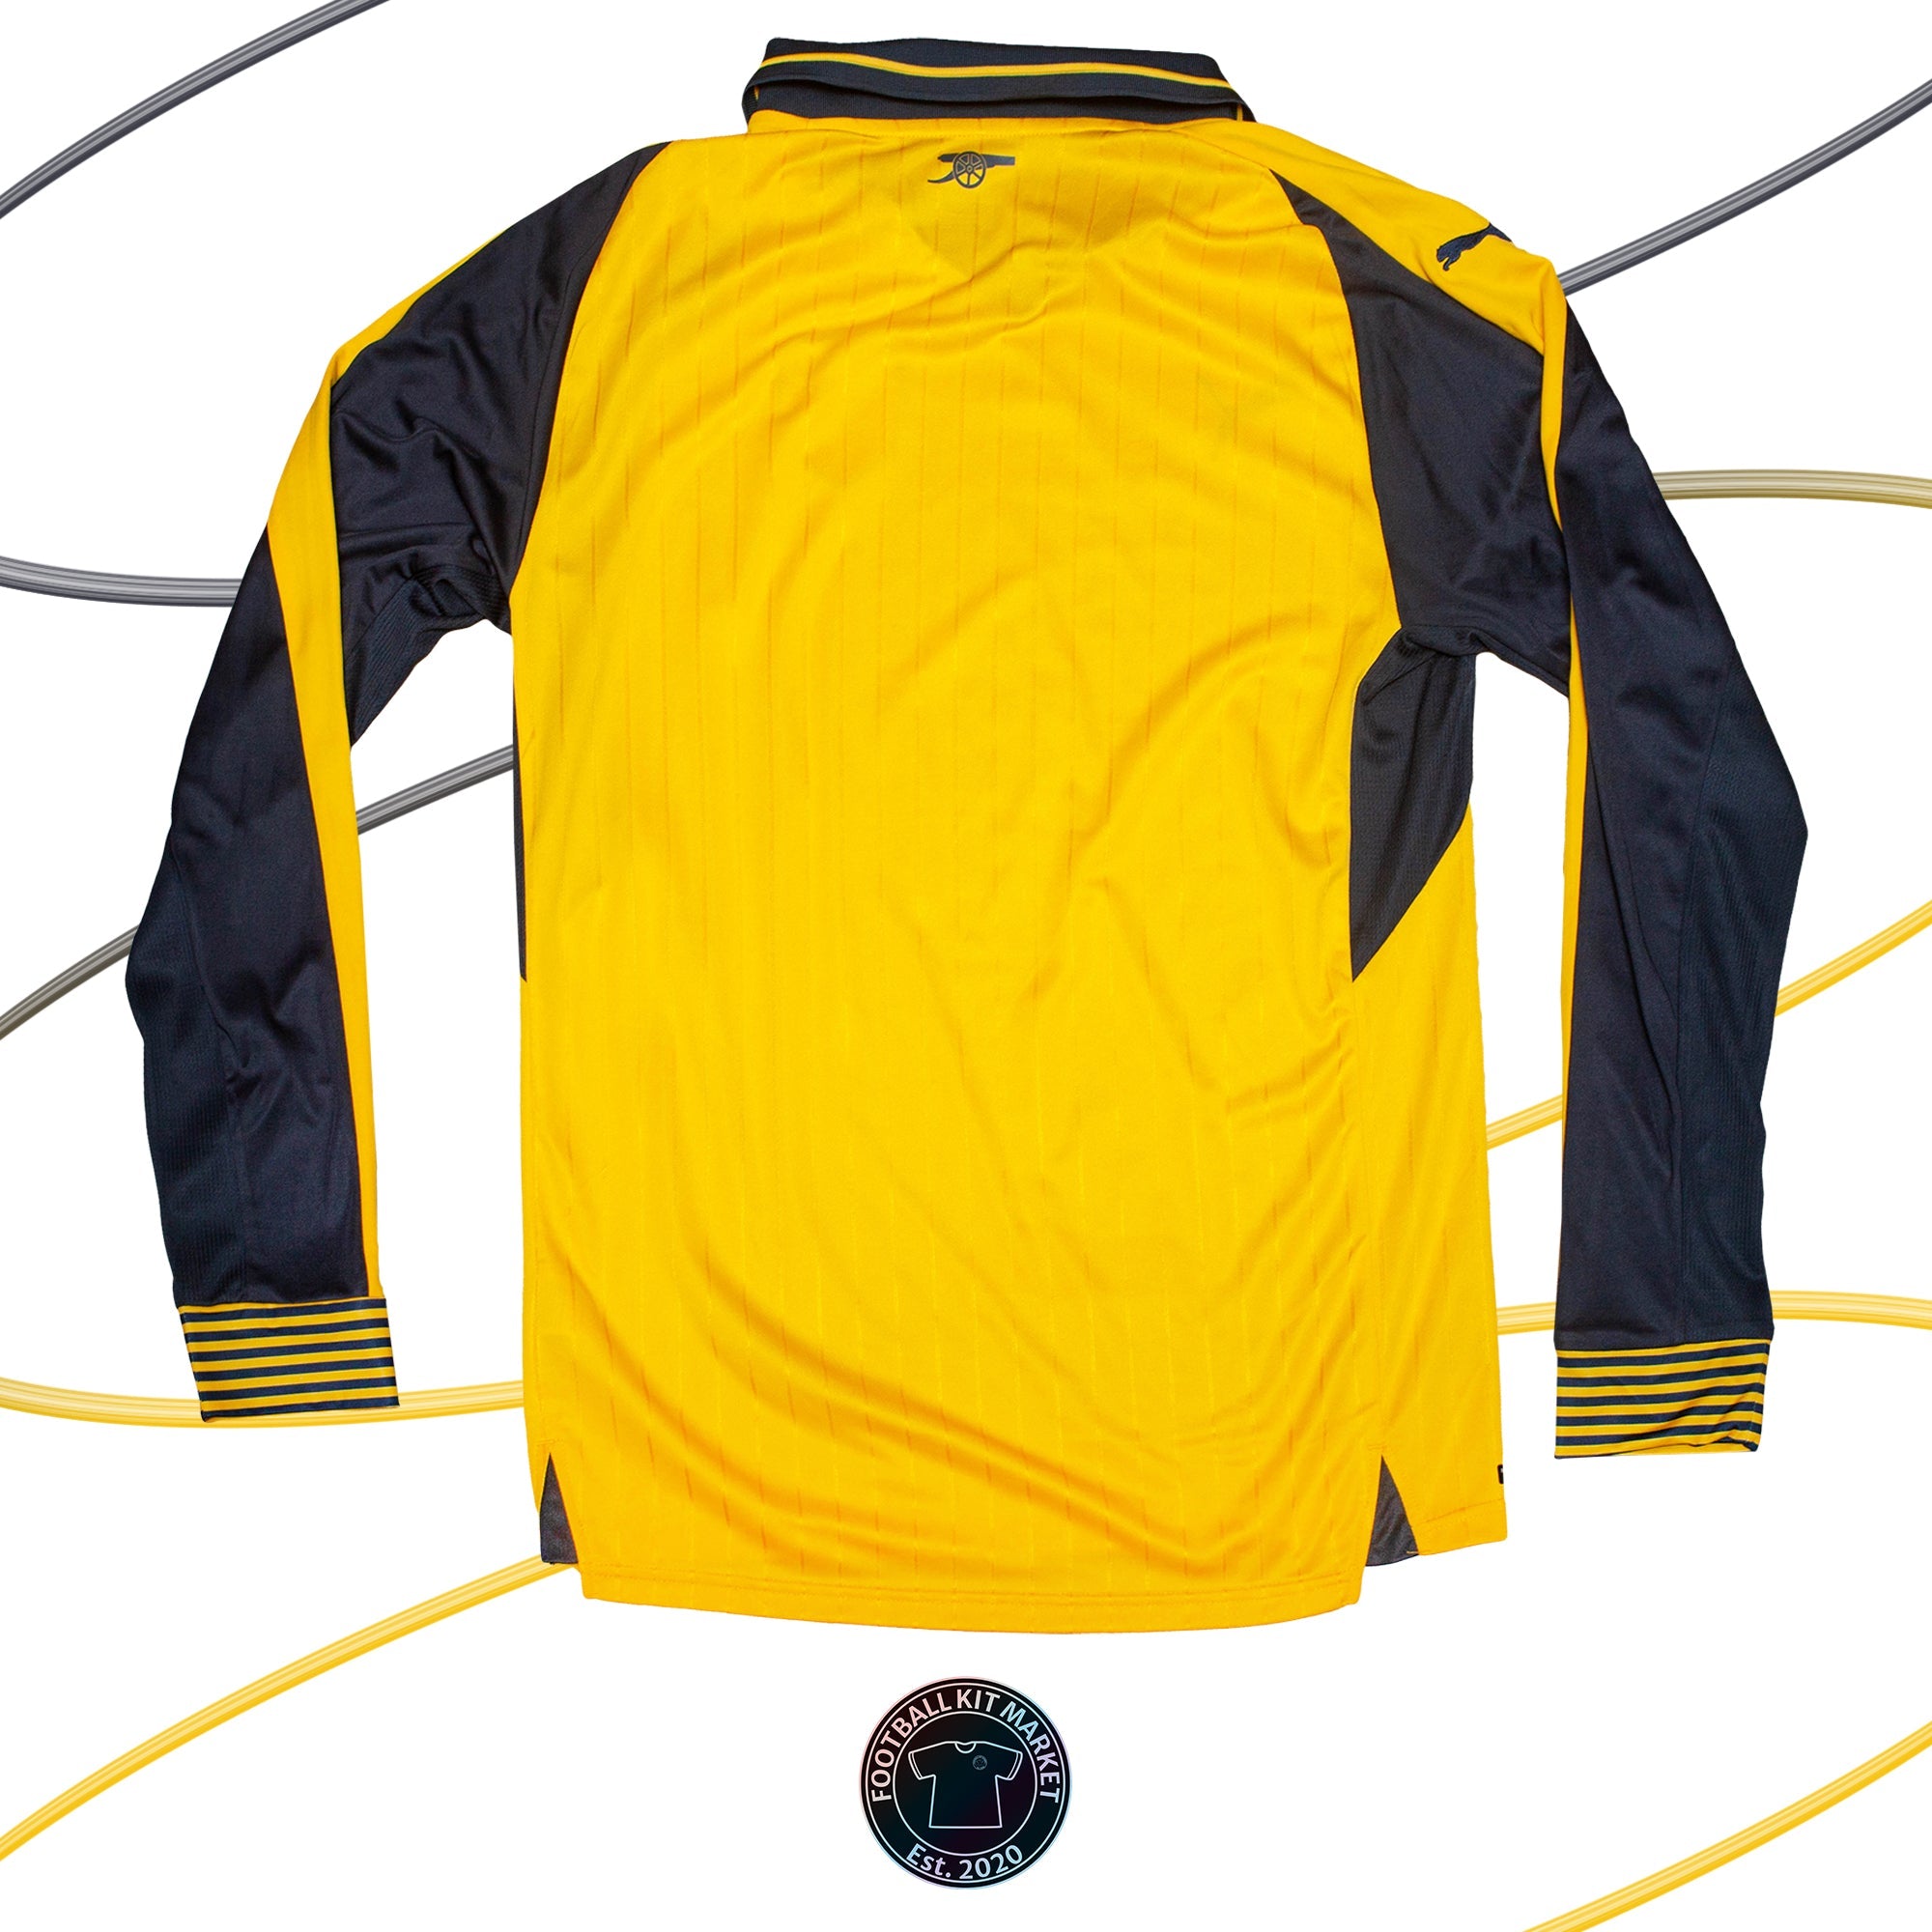 Genuine ARSENAL Away Shirt (2016-2017) - PUMA (L) - Product Image from Football Kit Market